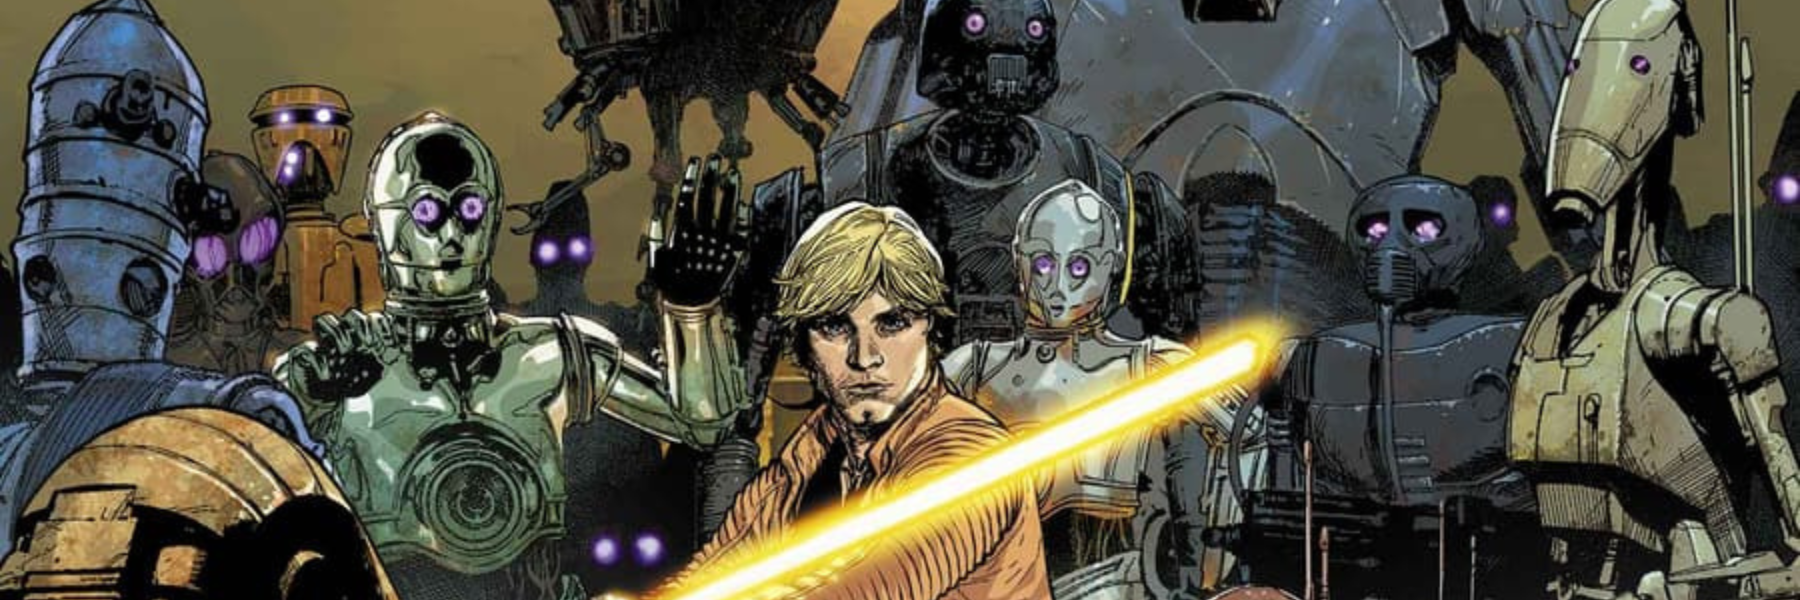 Star Wars: Dark Droids - Marvel's Sinister Robotic Crossover!